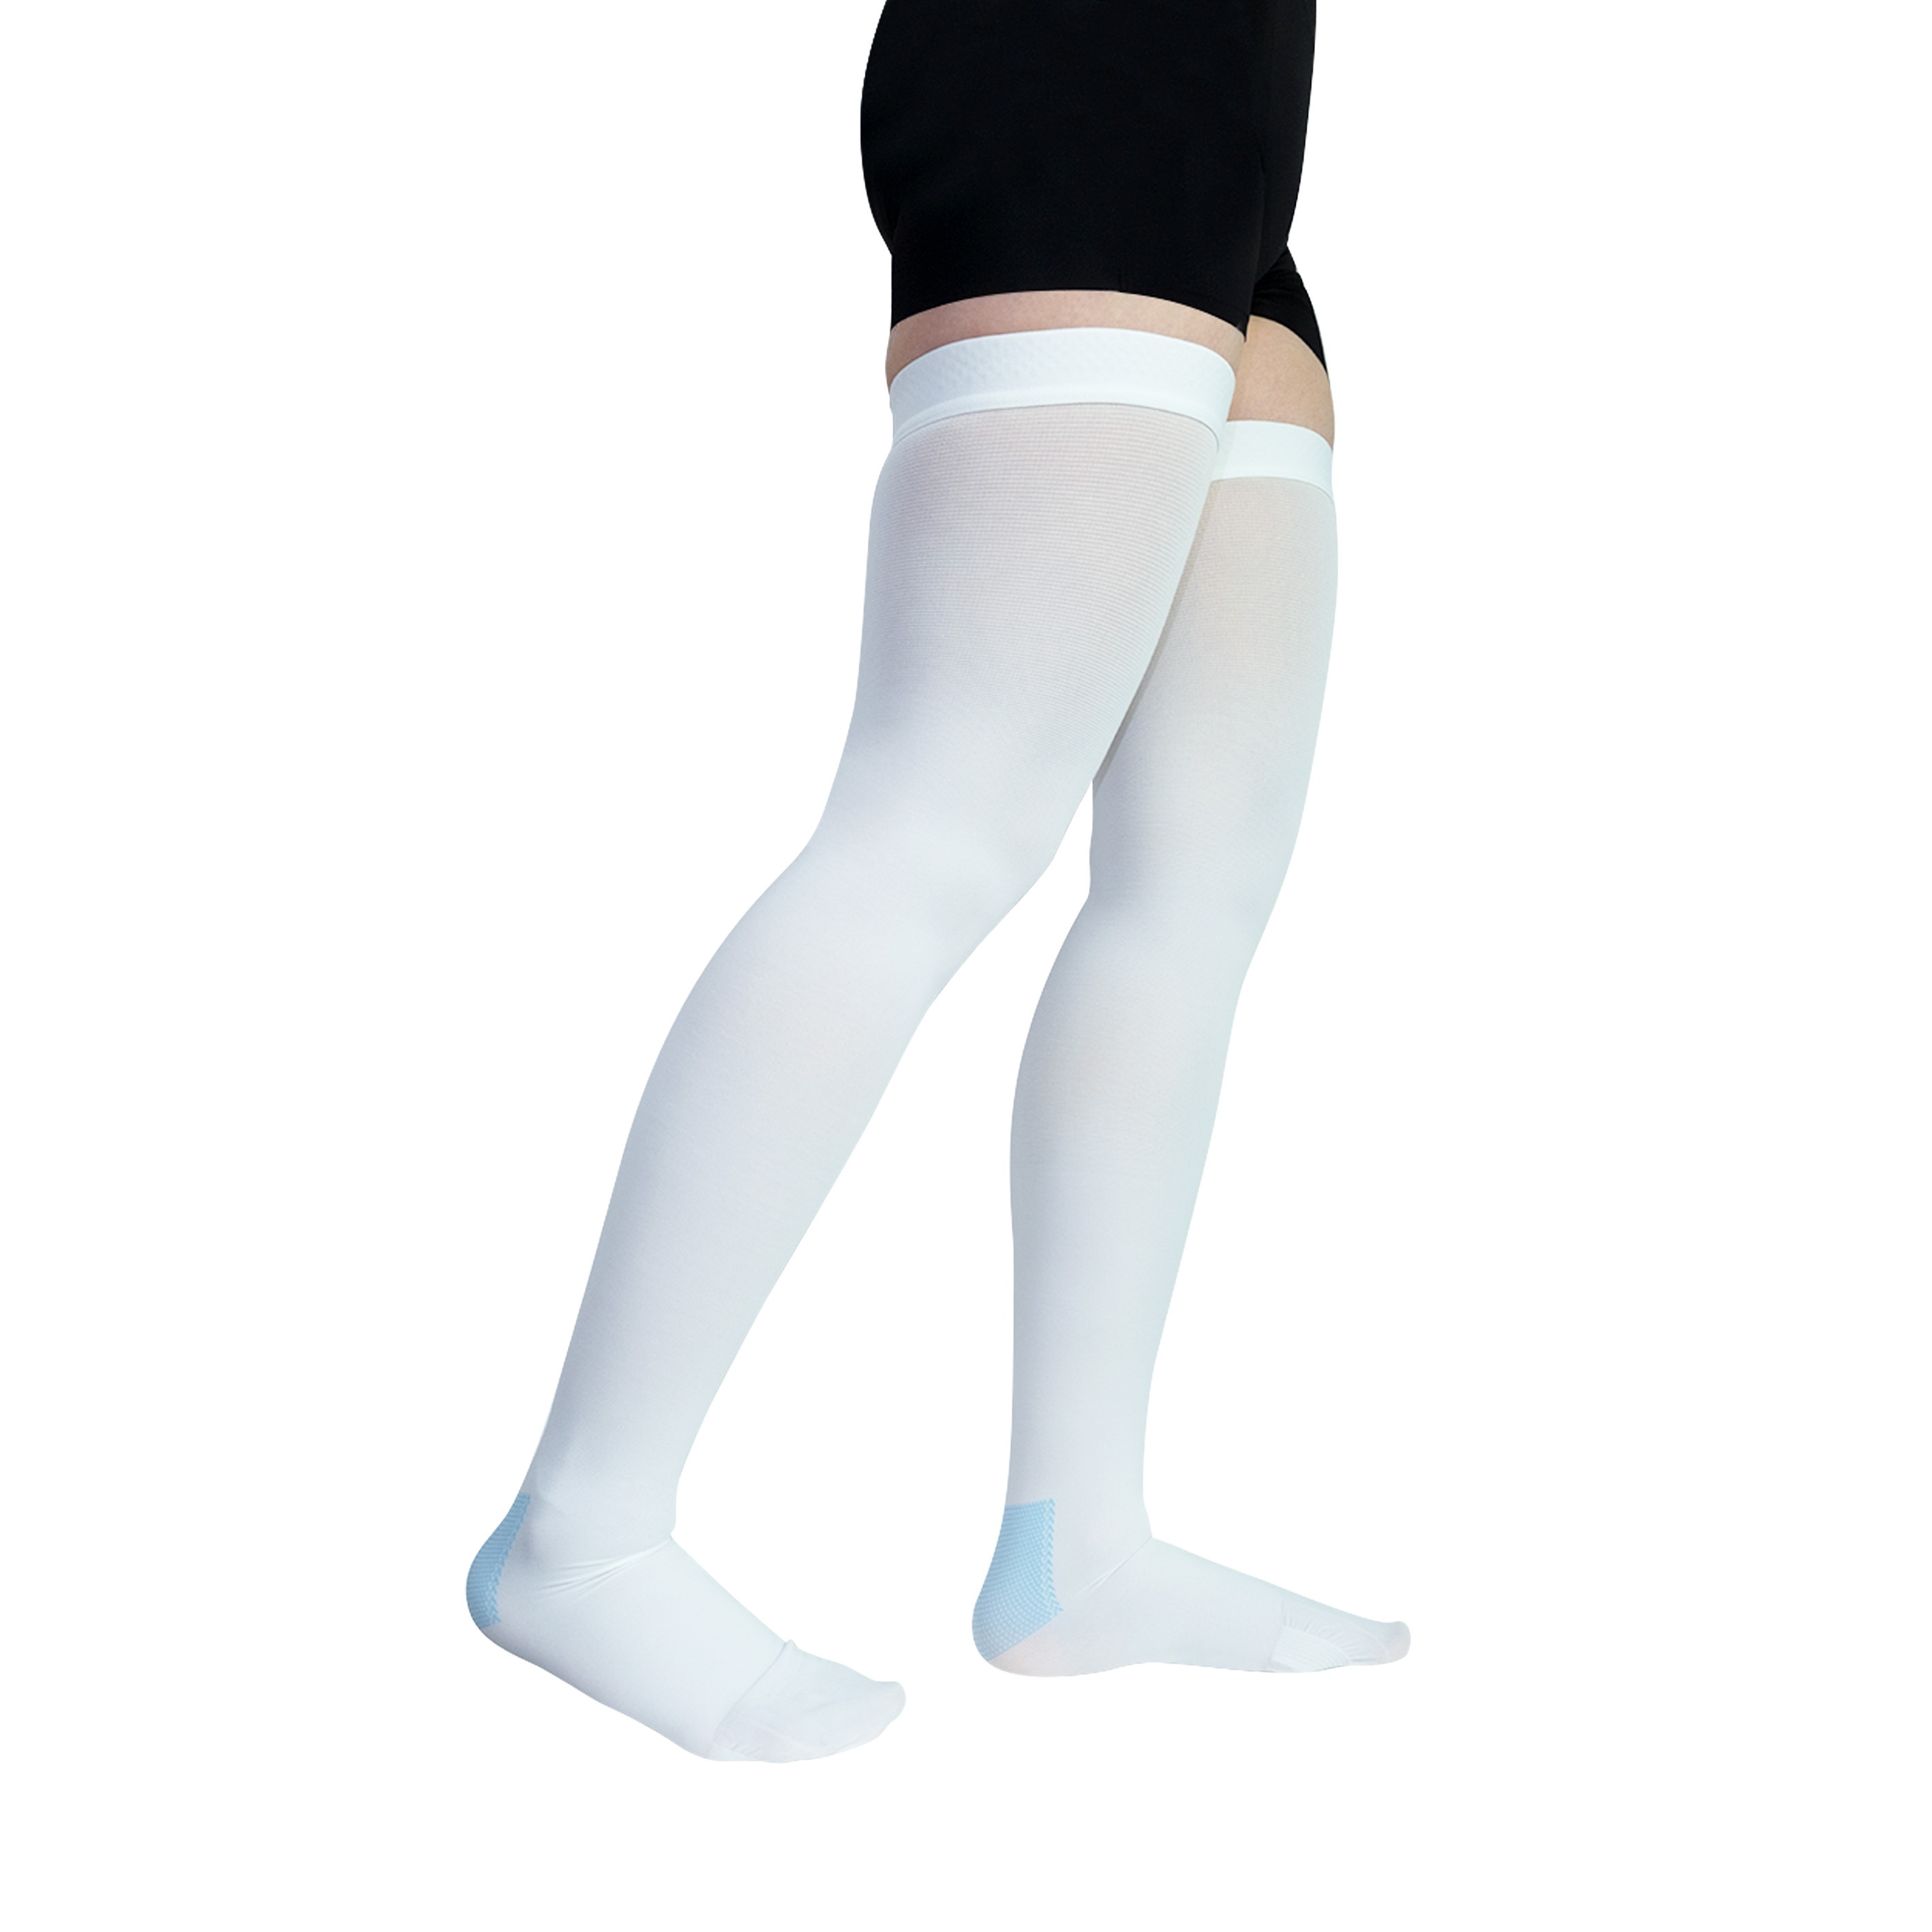 Anti Embolism Compression Stockings, Knee High Unisex Ted Hose Socks 15-20  mmHg Moderate Level